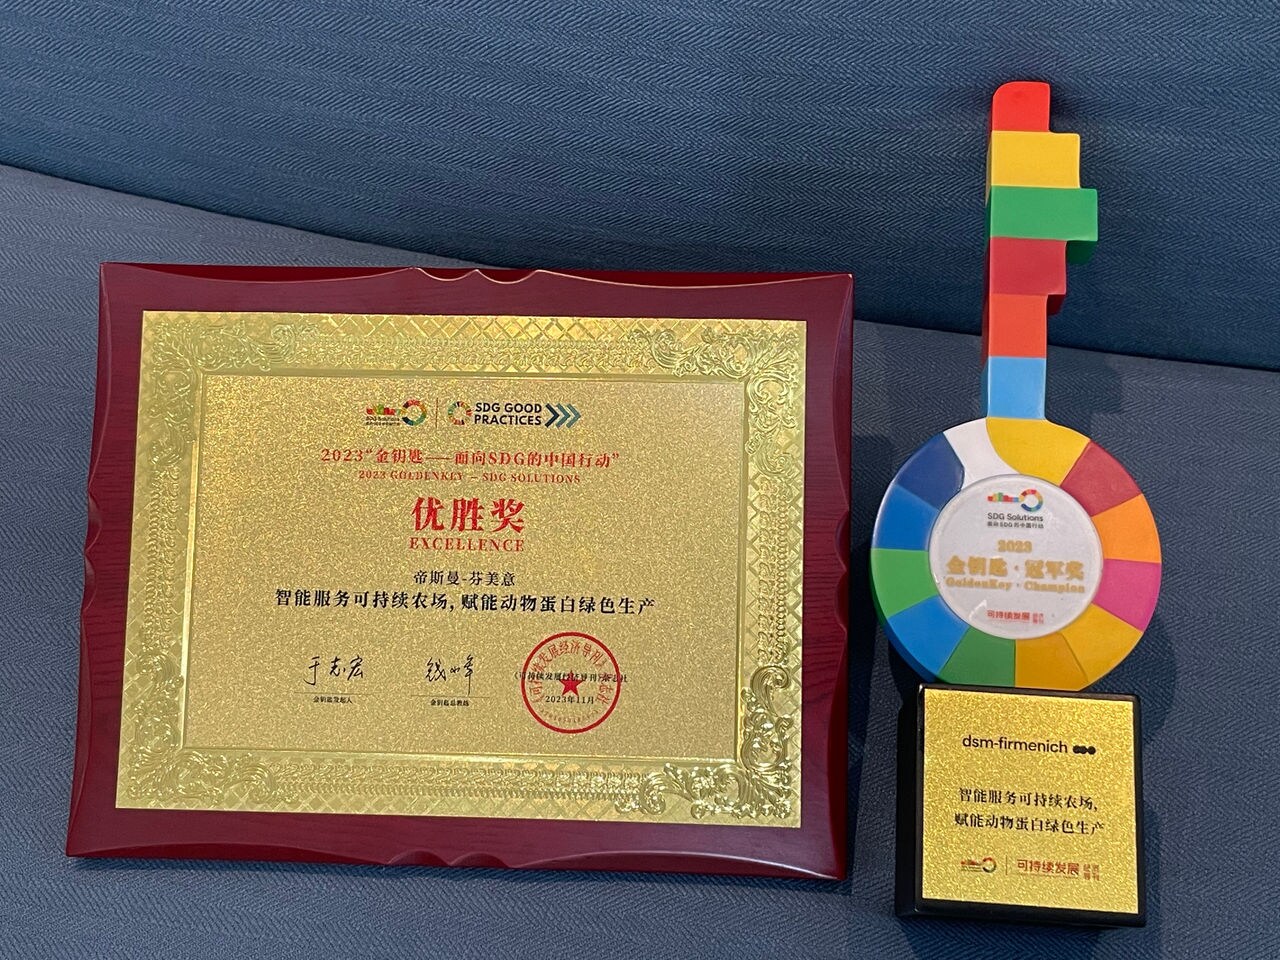 The ‘Golden Key’ awards received by dsm-firmenich